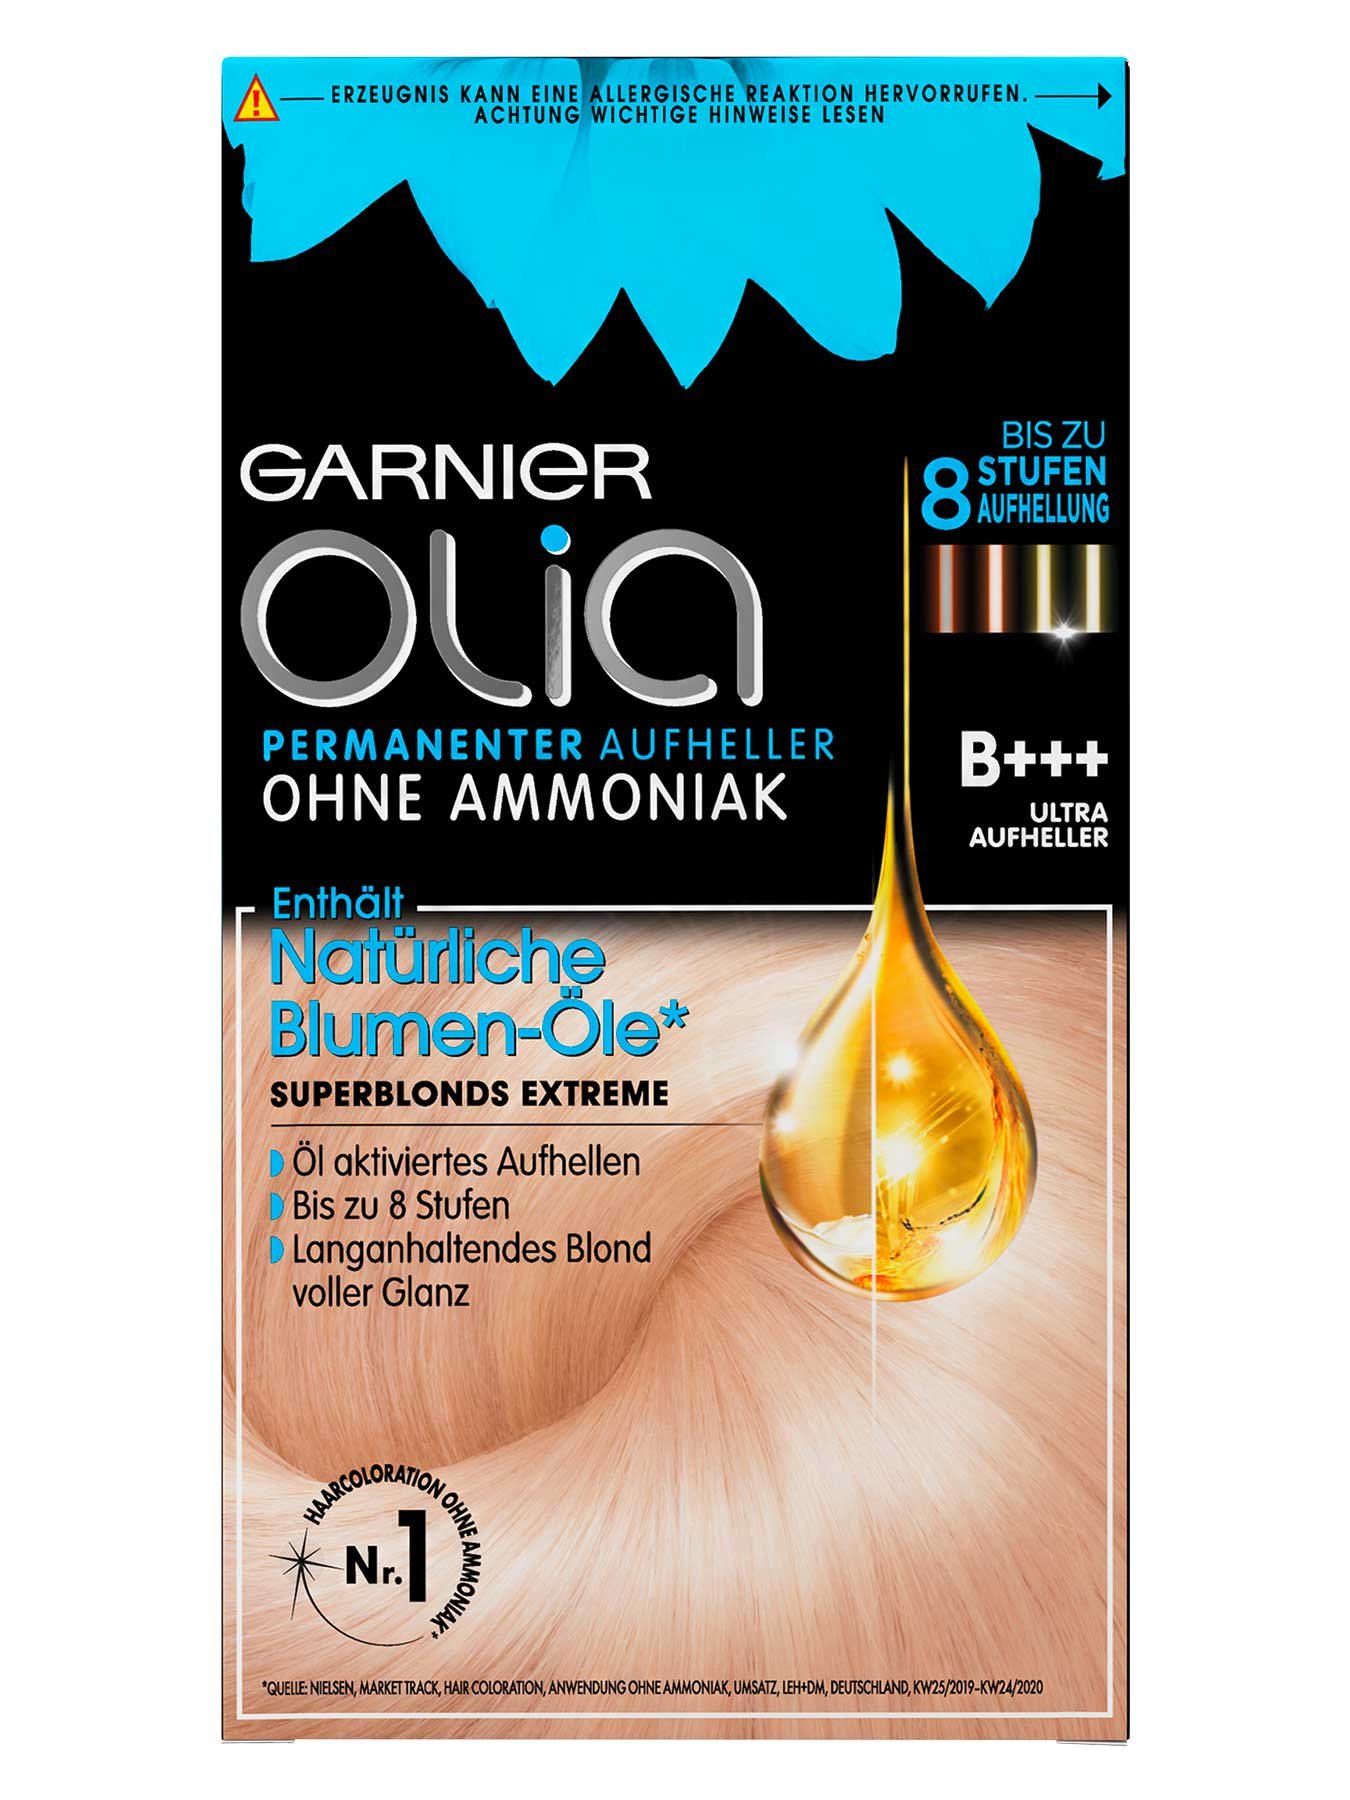 das Garnier Ultra Haar schonend auf B+++ Aufheller | hellt